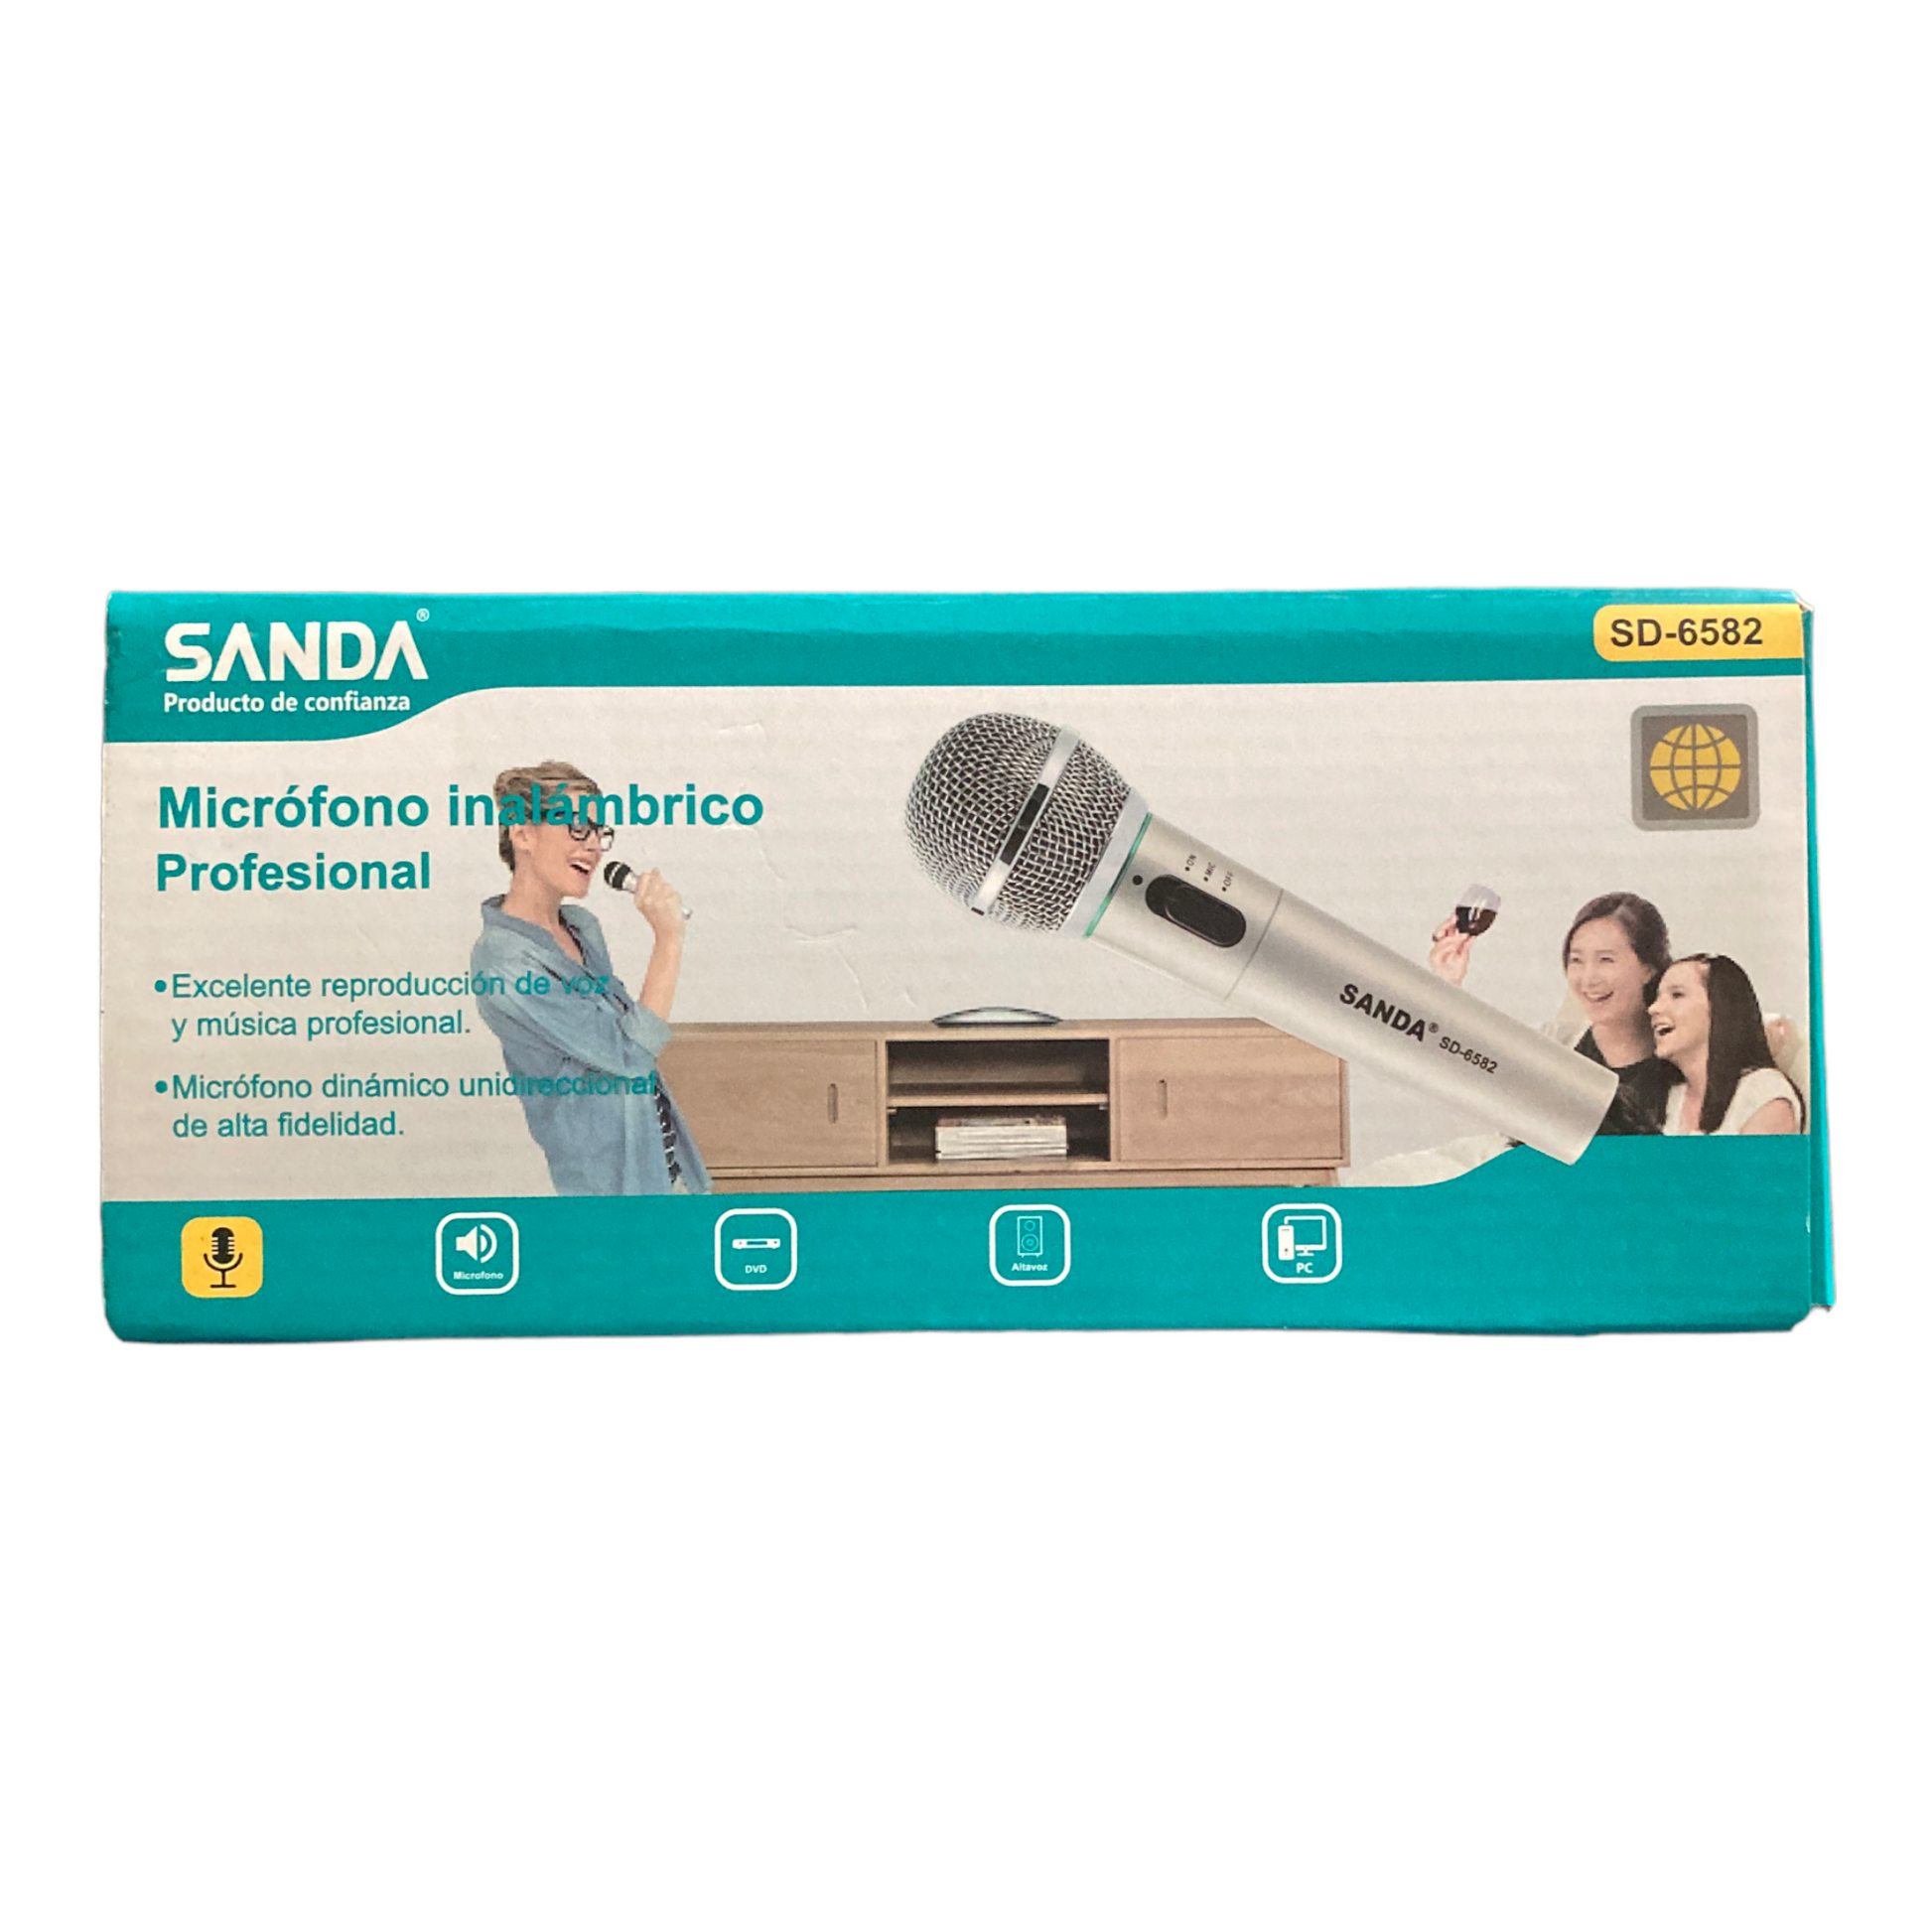 Micrófono inalámbrico profesional SANDA SD-6582 – Ferreteria RG